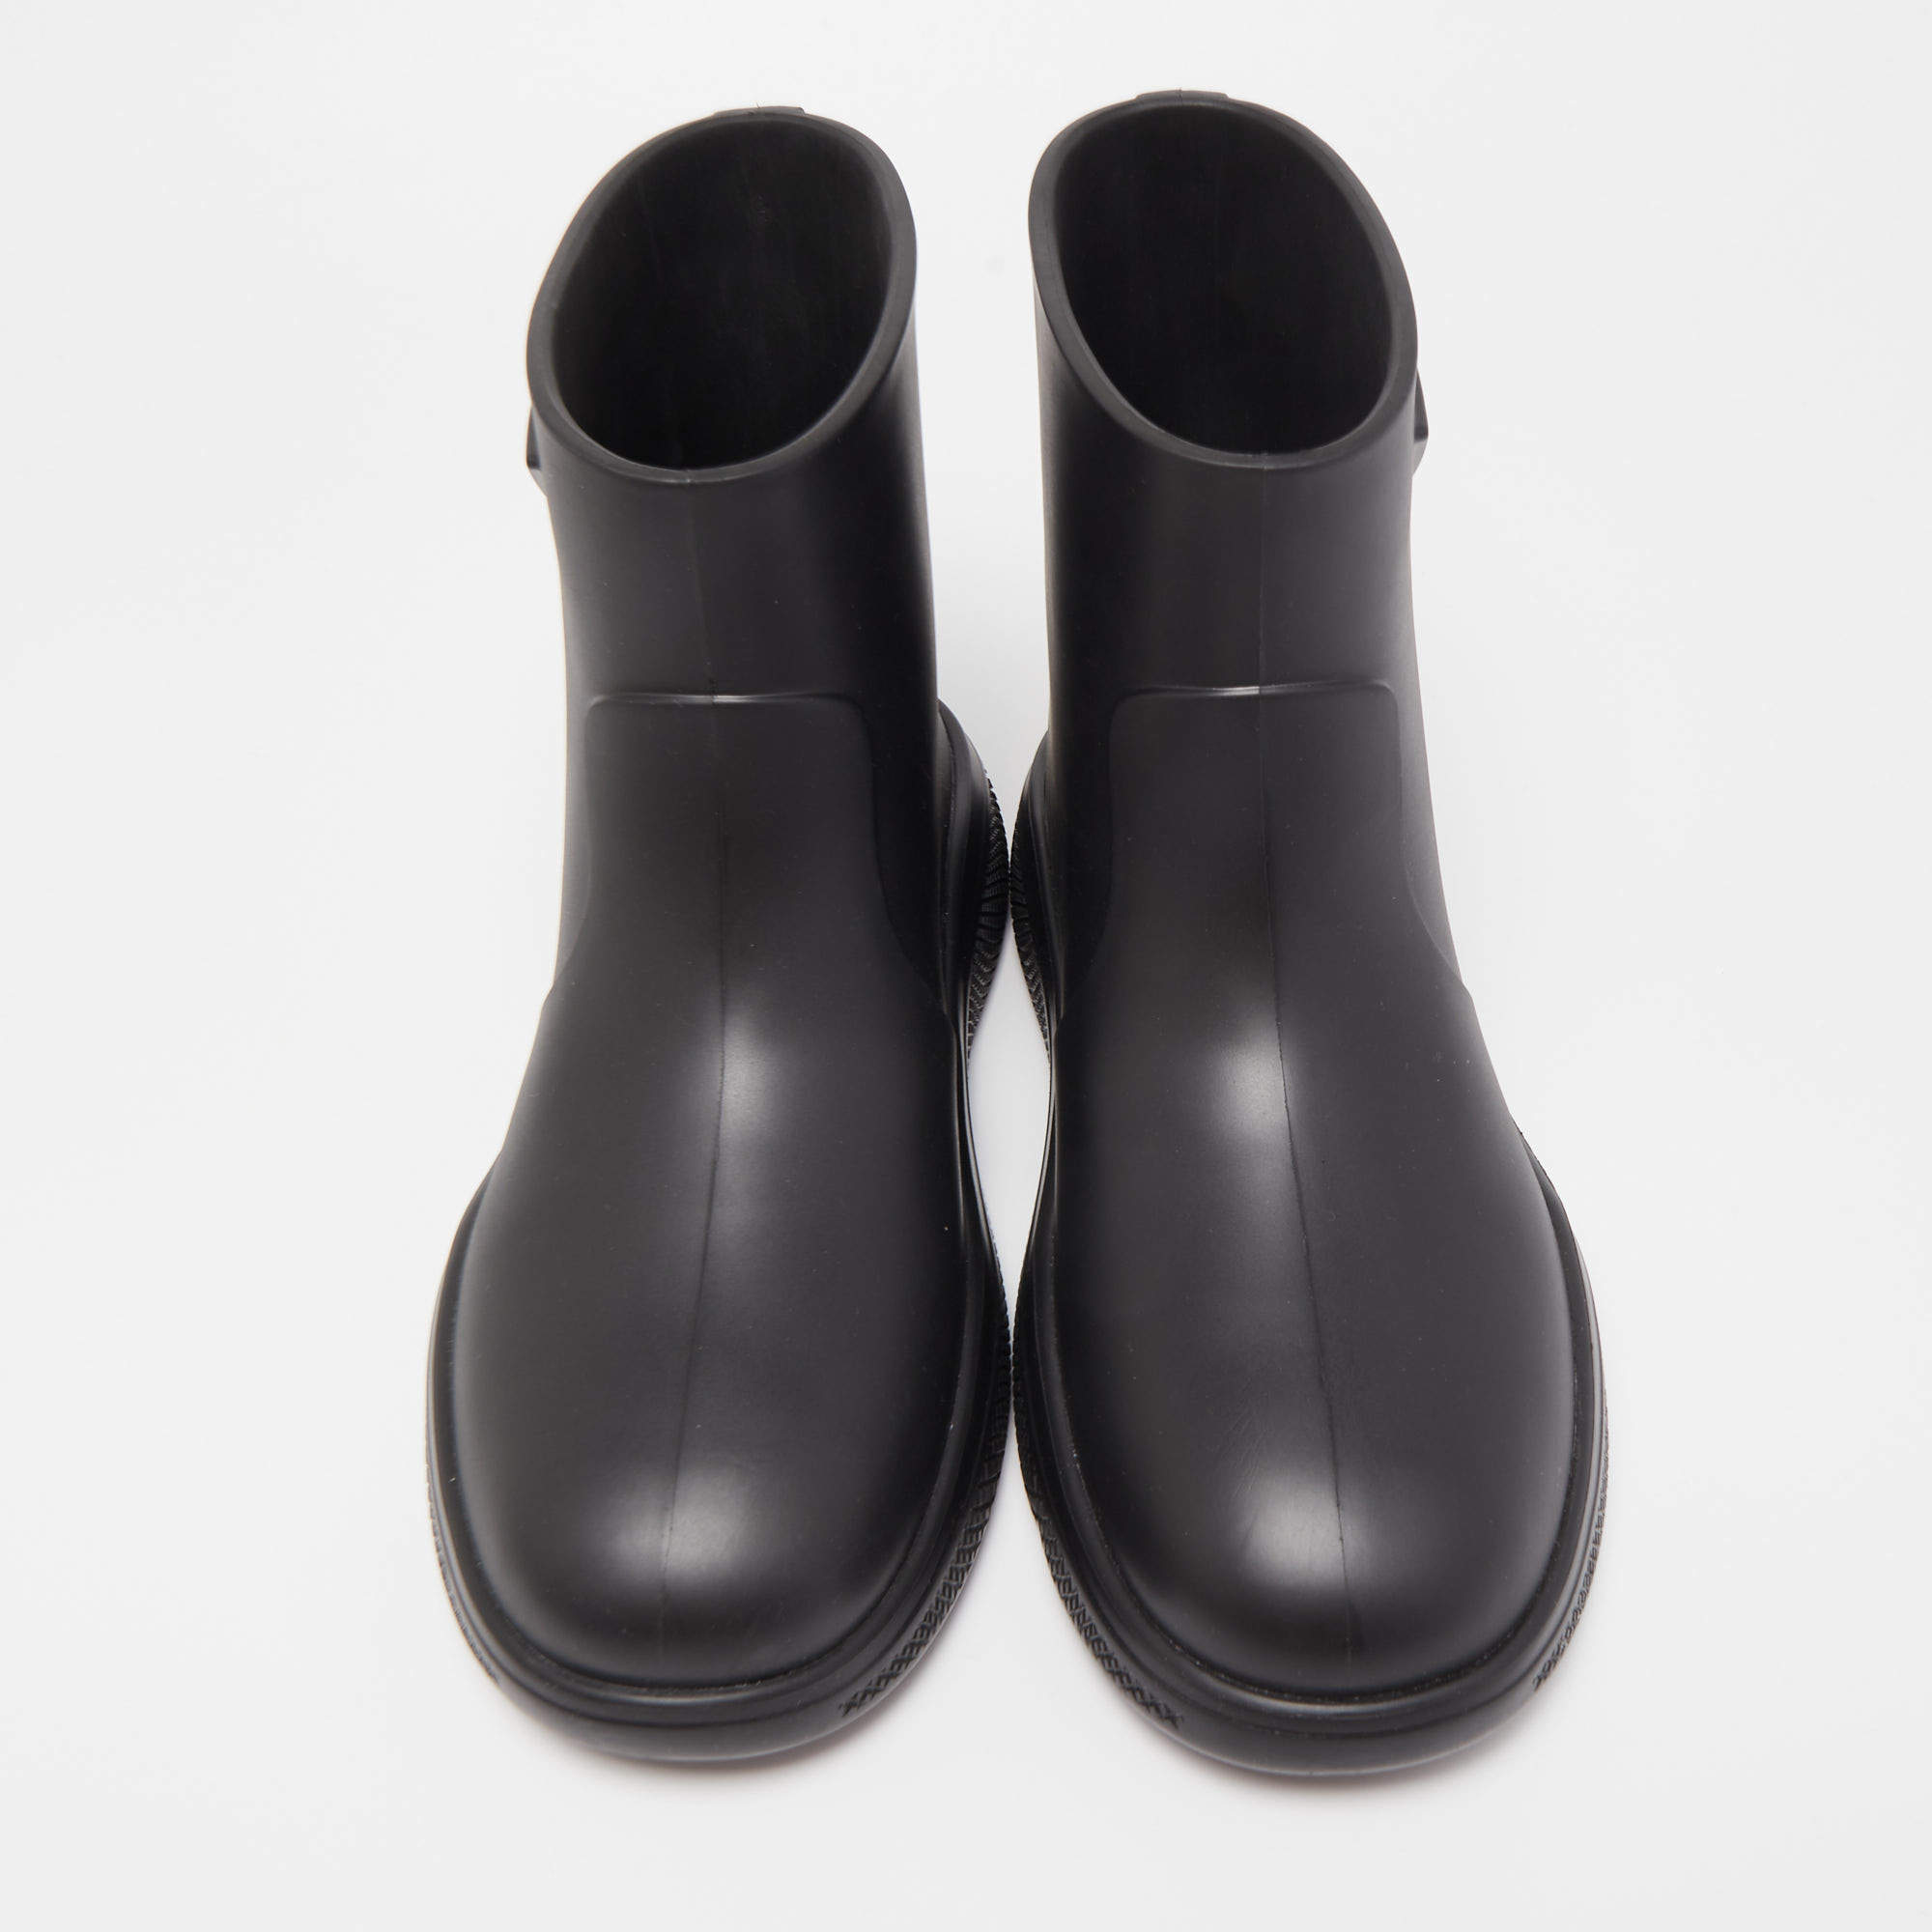 Prada Rubber Rain Boots - Black Boots, Shoes - PRA821717